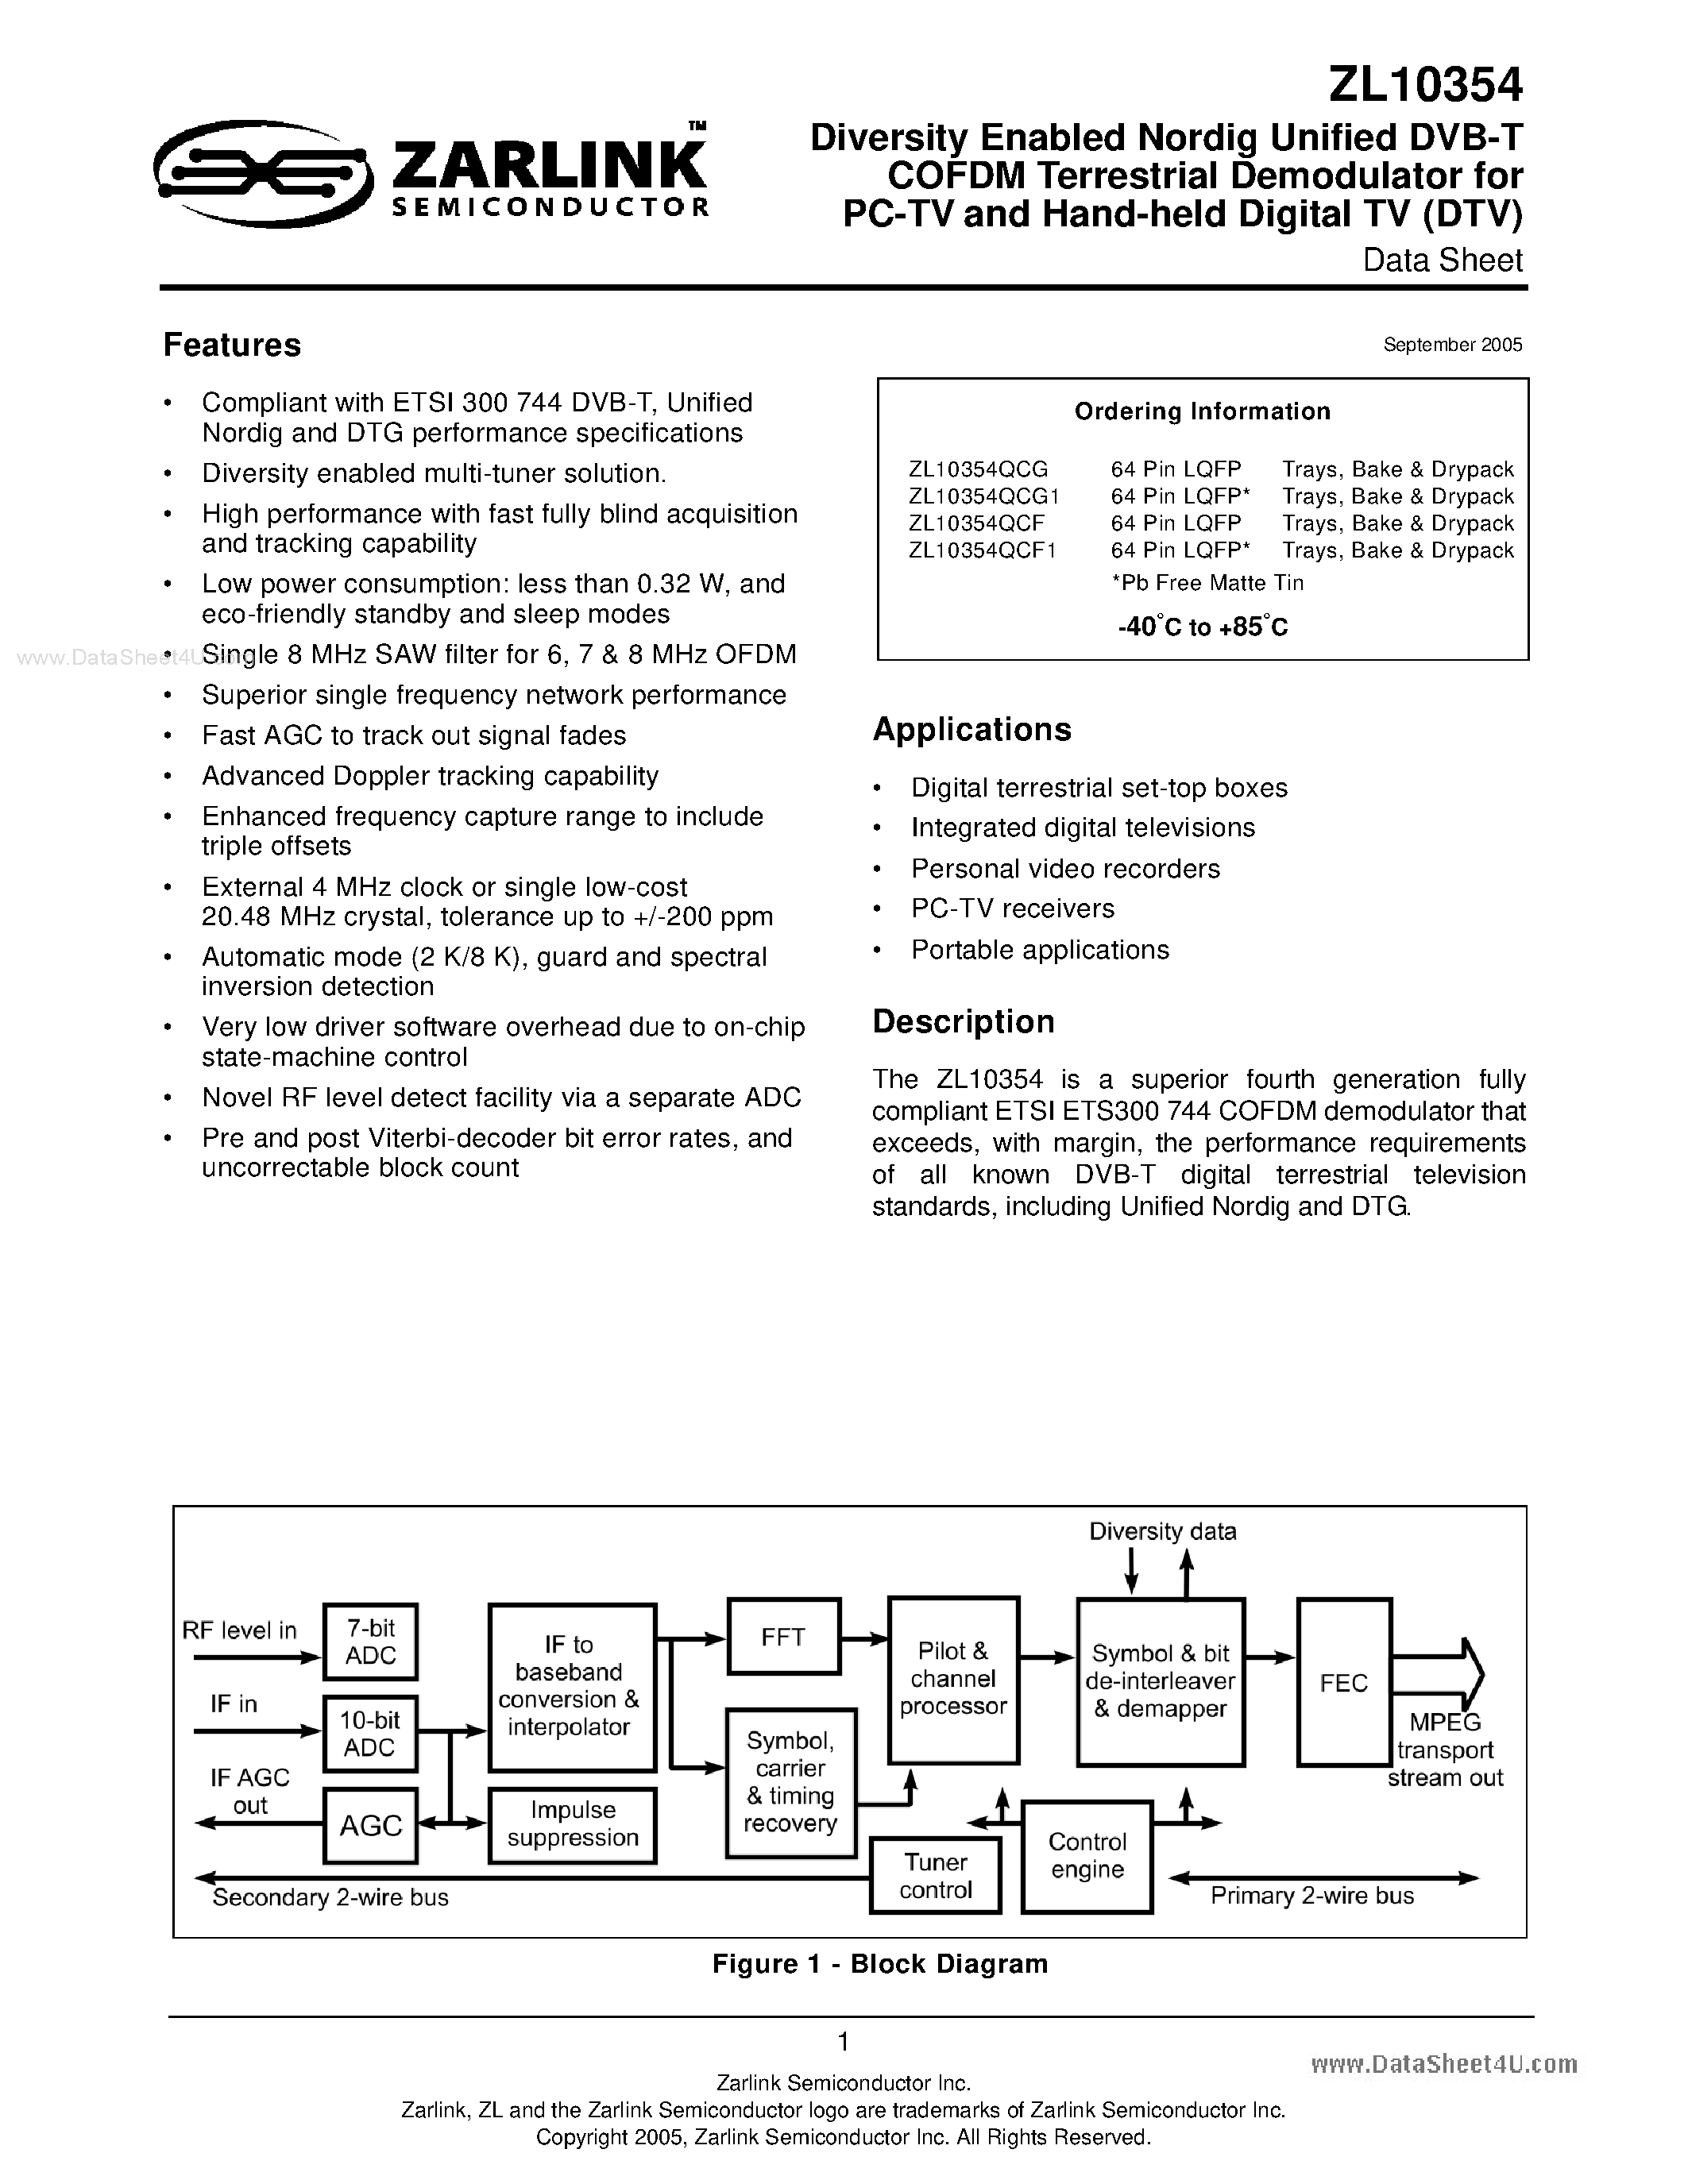 Datasheet ZL10354 - Diversity Enabled Nordig Unified DVB-T COFDM Terrestrial Demodulator page 1